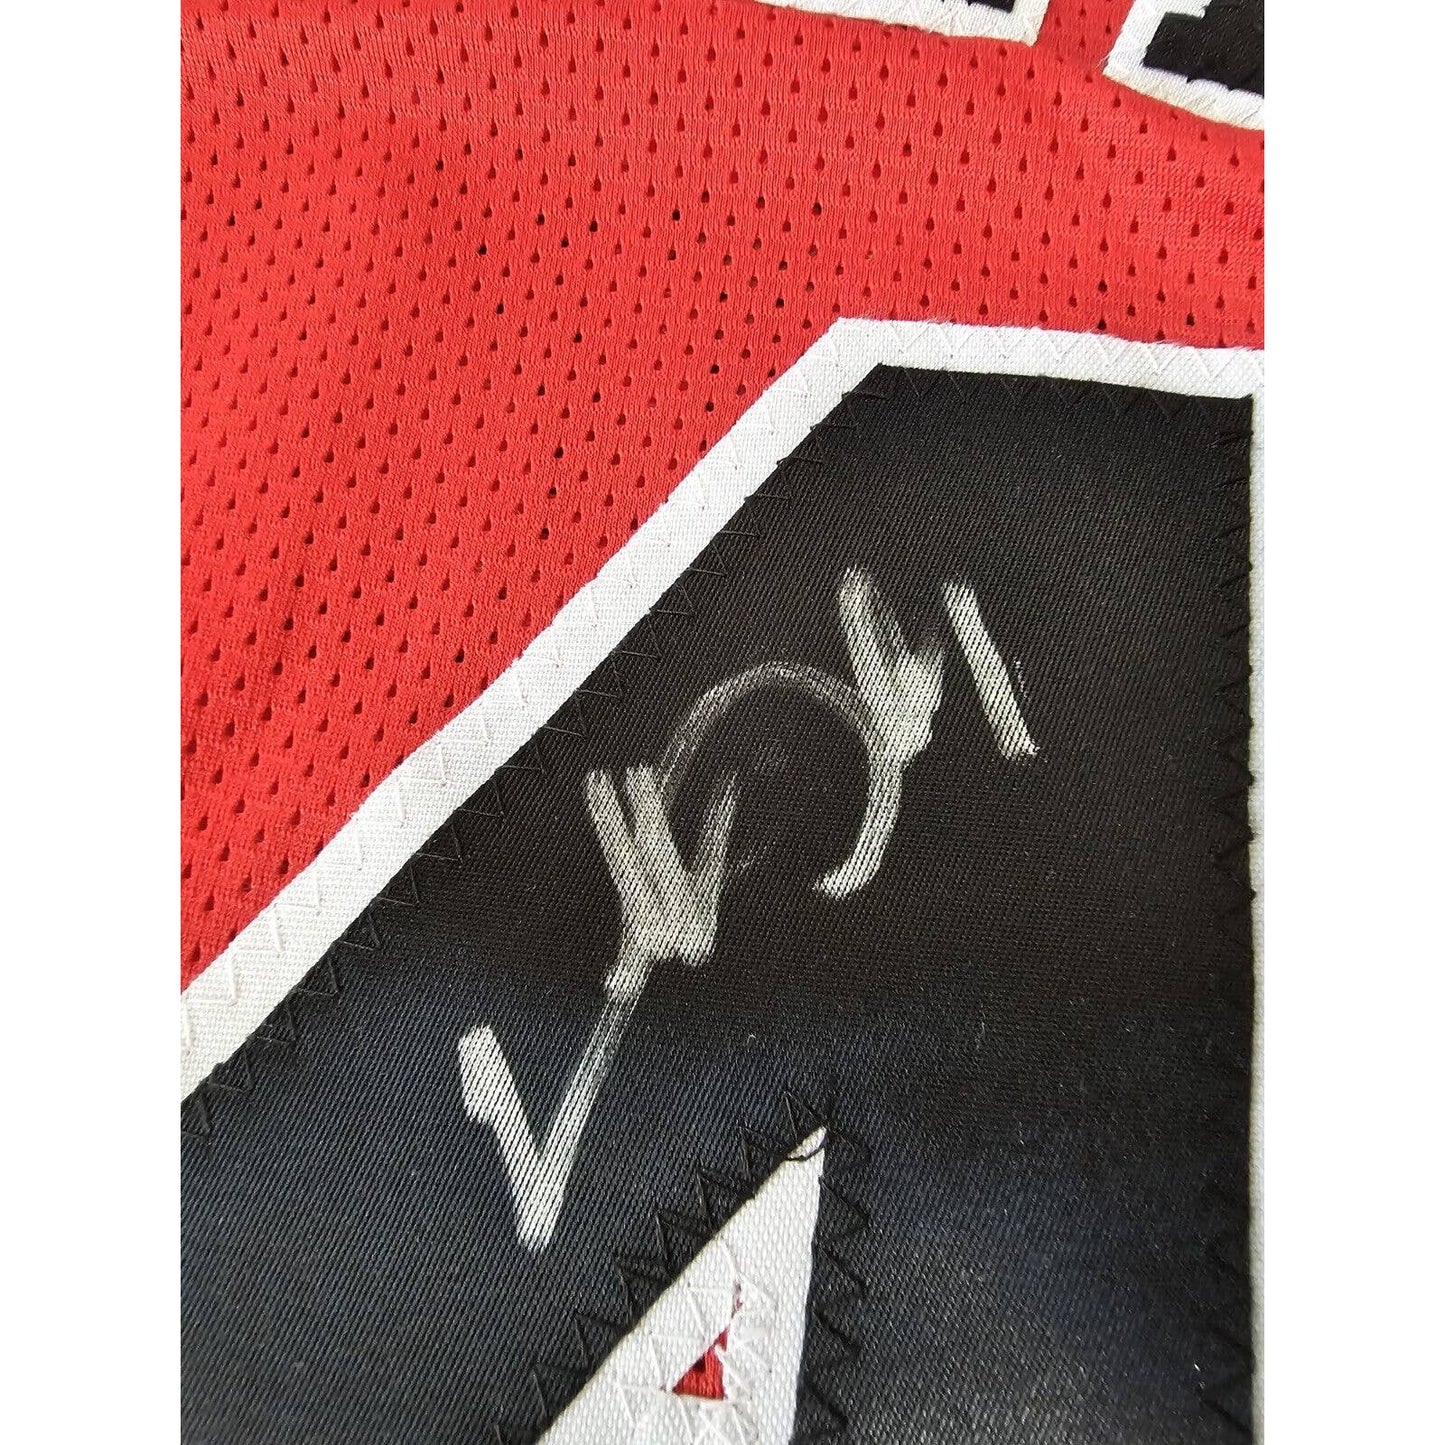 Charles Oakley Autographed/Signed Jersey JSA COA Chicago Bulls